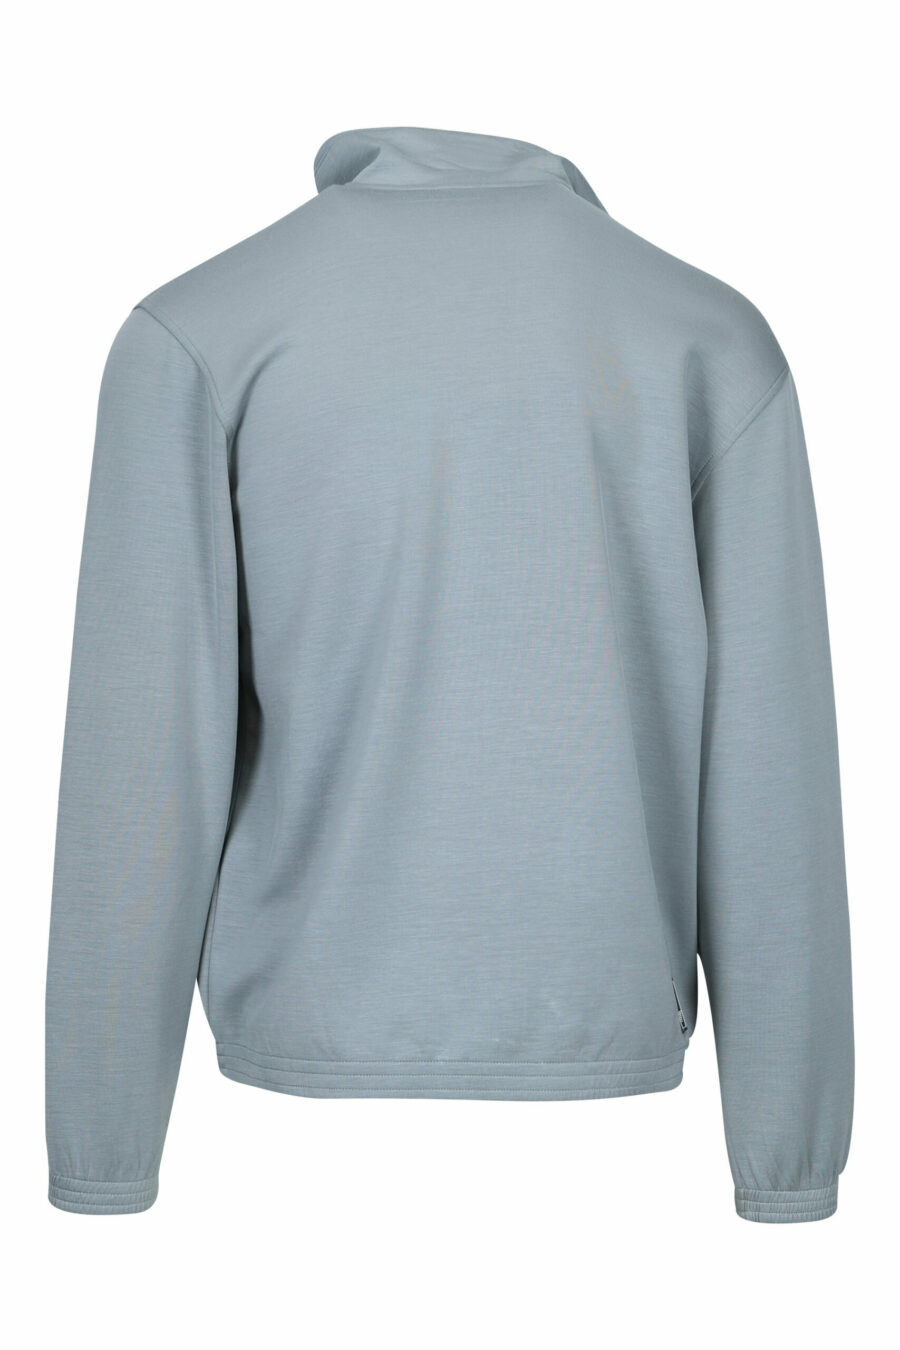 Grey sweatshirt with eagle minilogue - 8058997157452 1 scaled